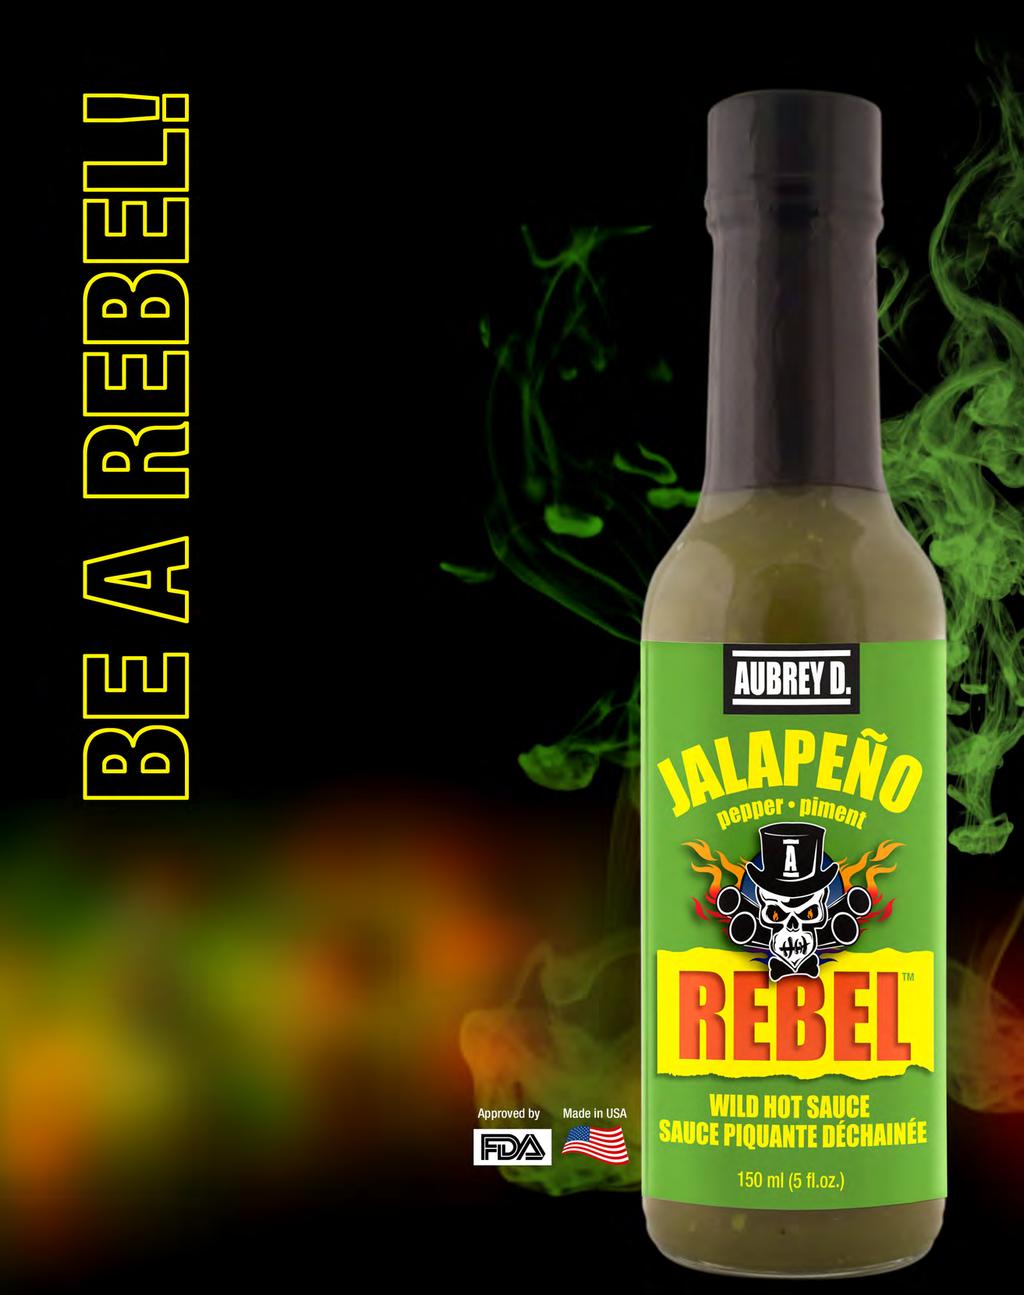 The Aubrey D. Rebel Jalapeño Hot Sauce is a simple yet delicately balanced sauce serving up exquisite pleasure.